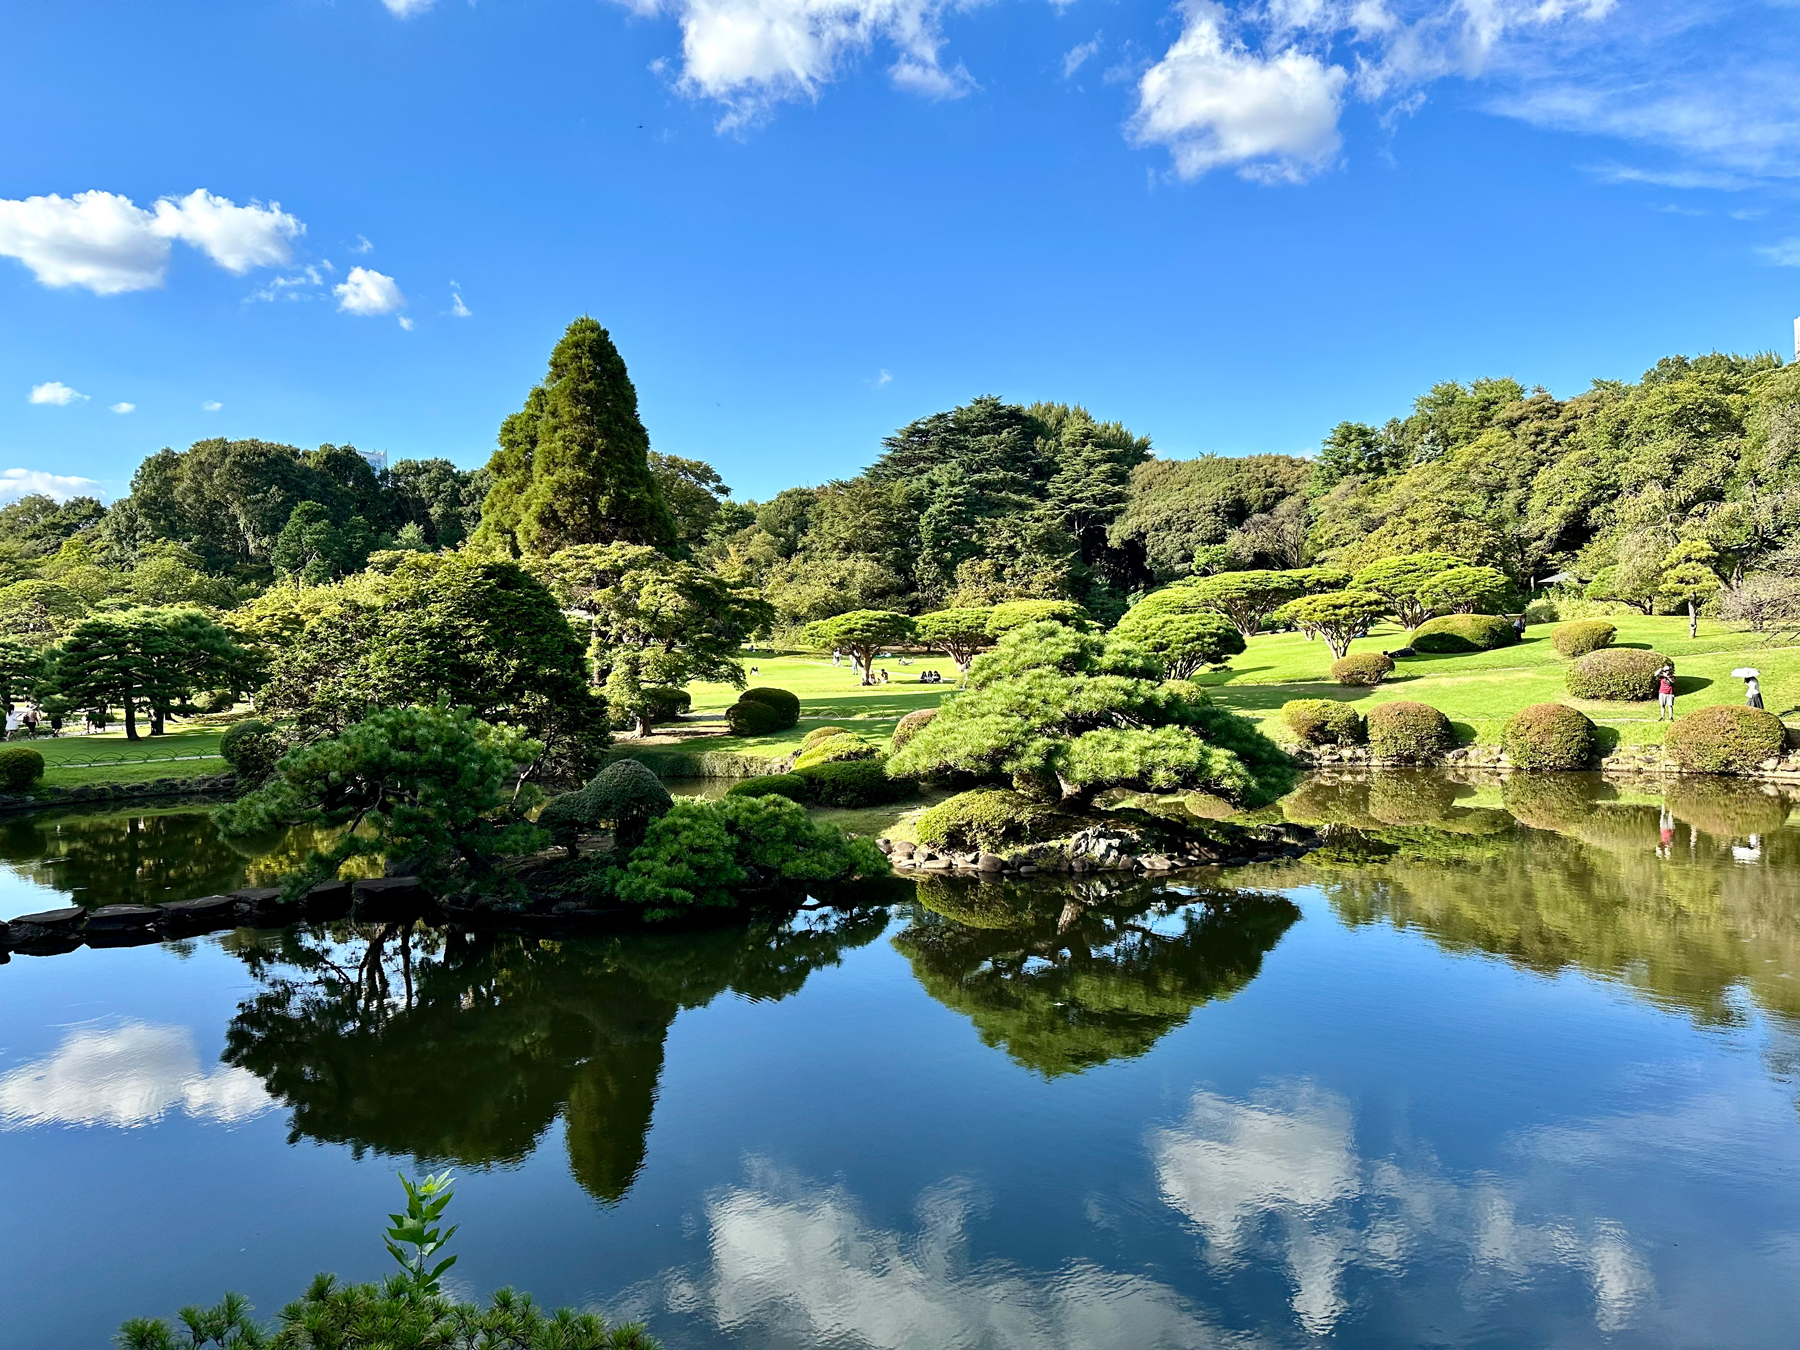 A view of the traditional Japanese gardens in Shinjuku Gyoen National Garden